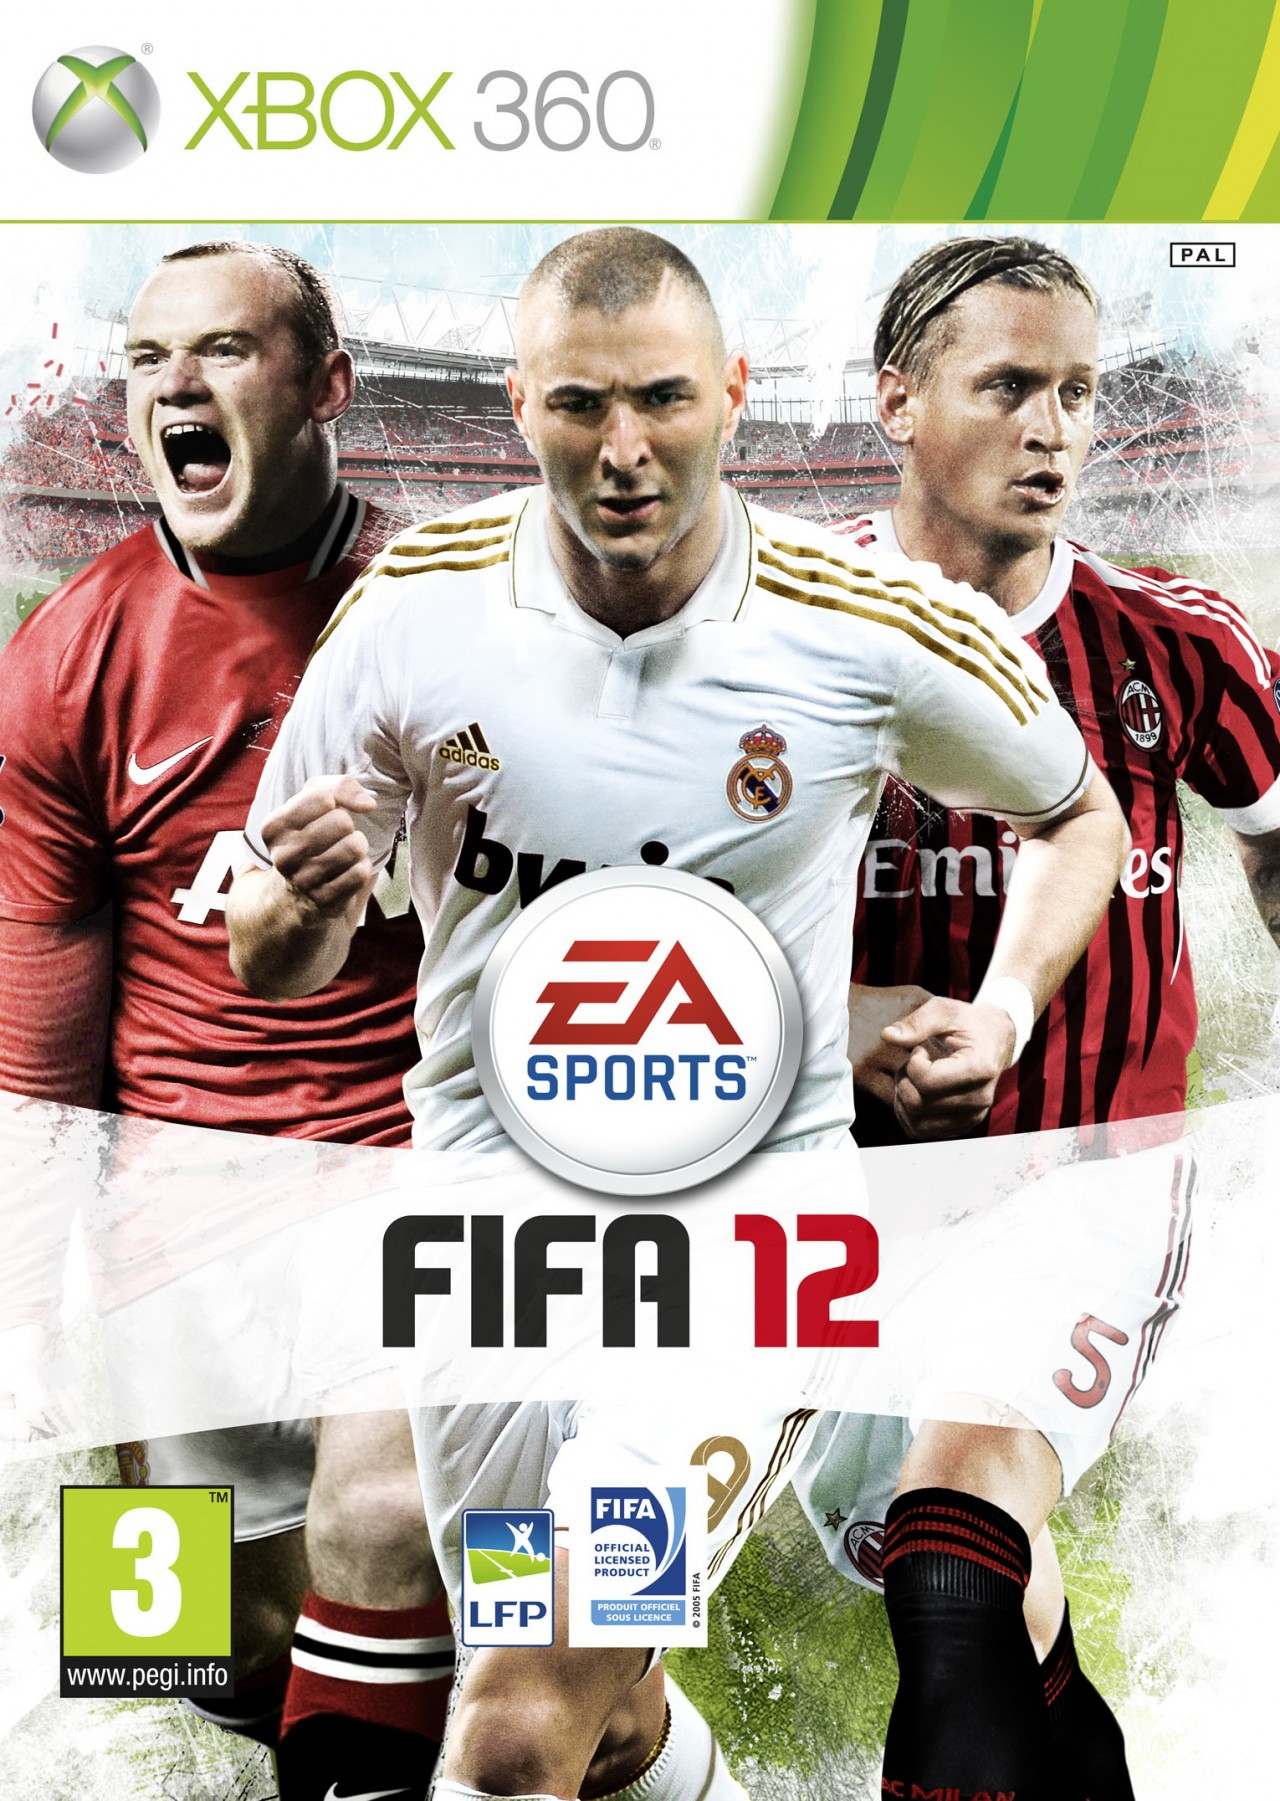 Fifa freeboot. ФИФА 12 Xbox 360. Обложка диска ФИФА 12 Xbox 360. FIFA 11 Xbox 360 обложка. FIFA 12 диск.